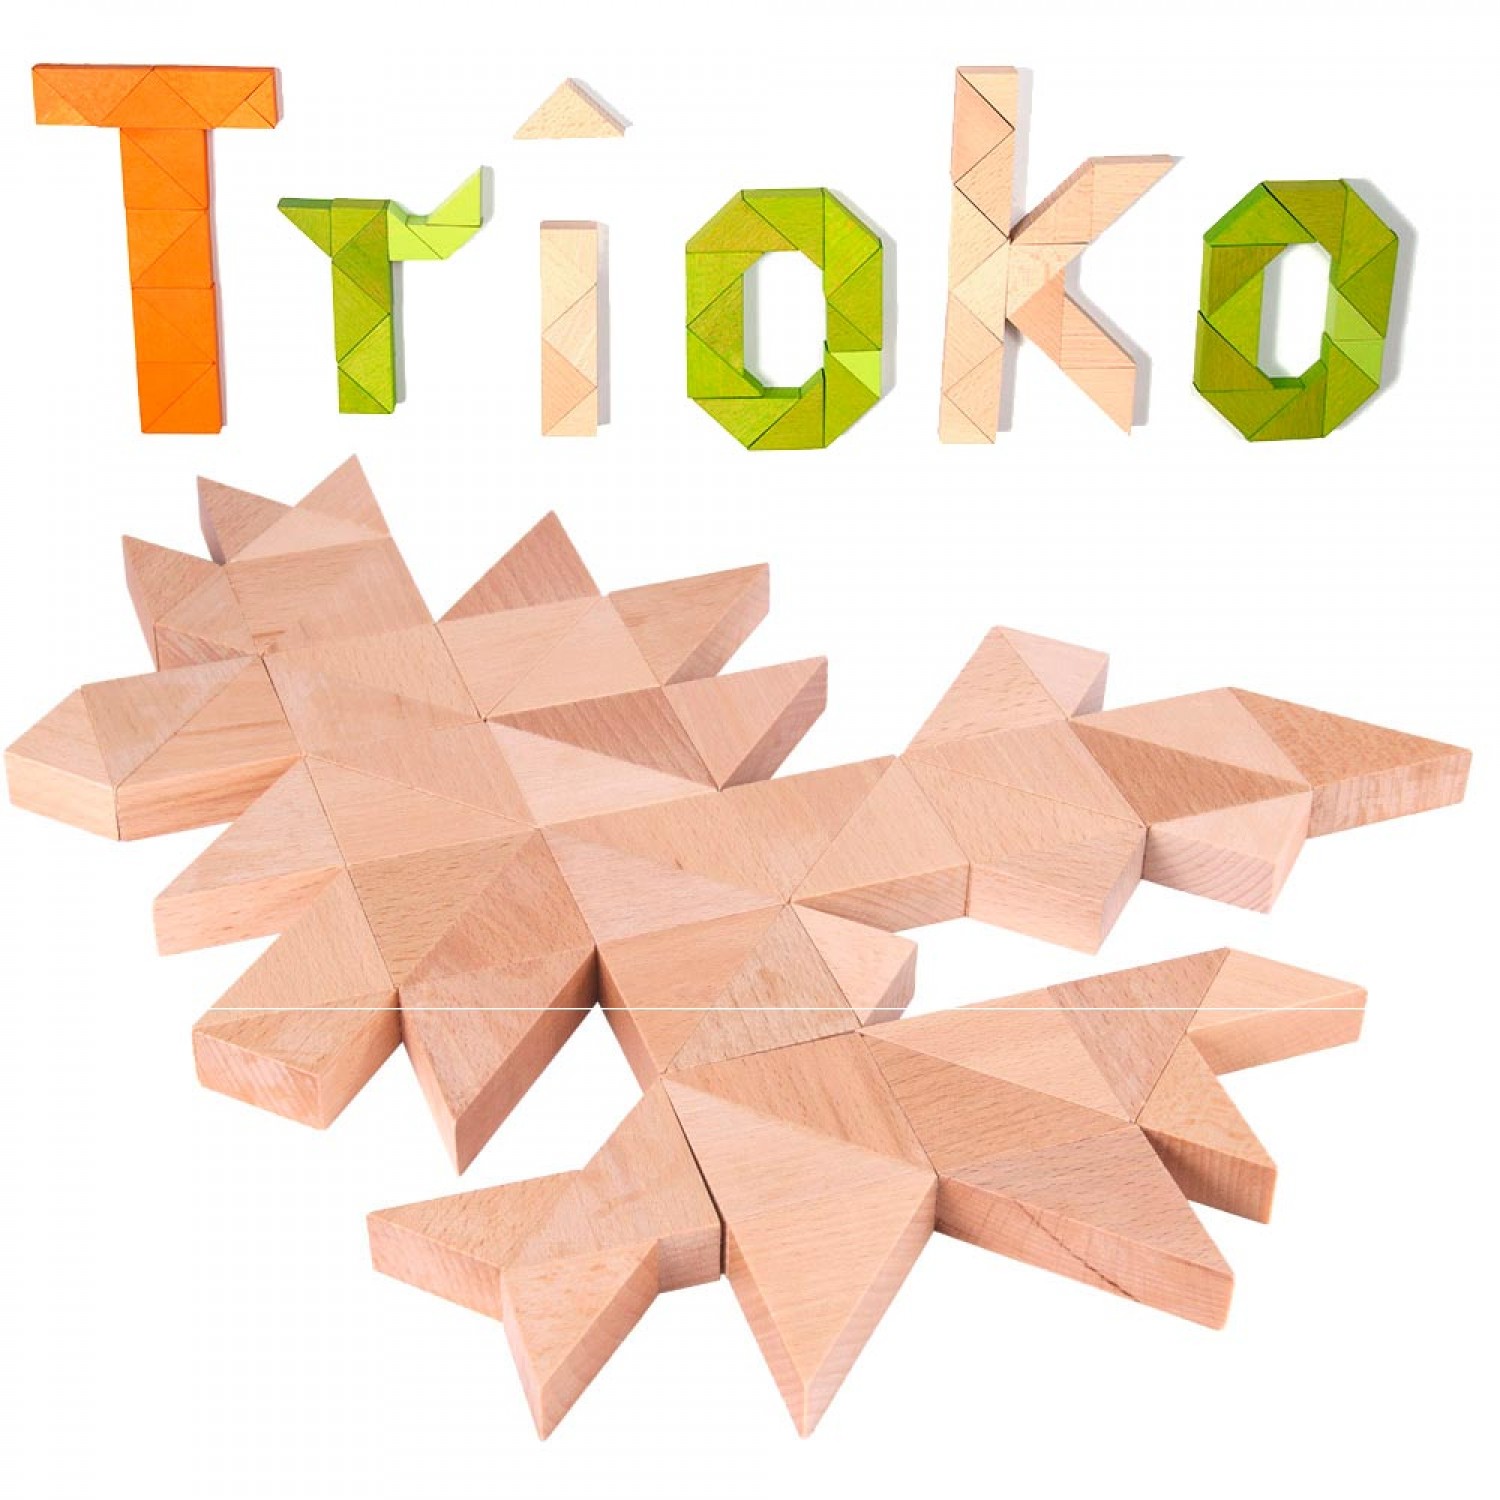 Beck Trioko Triangles Wooden Building Bricks, natural & coloured